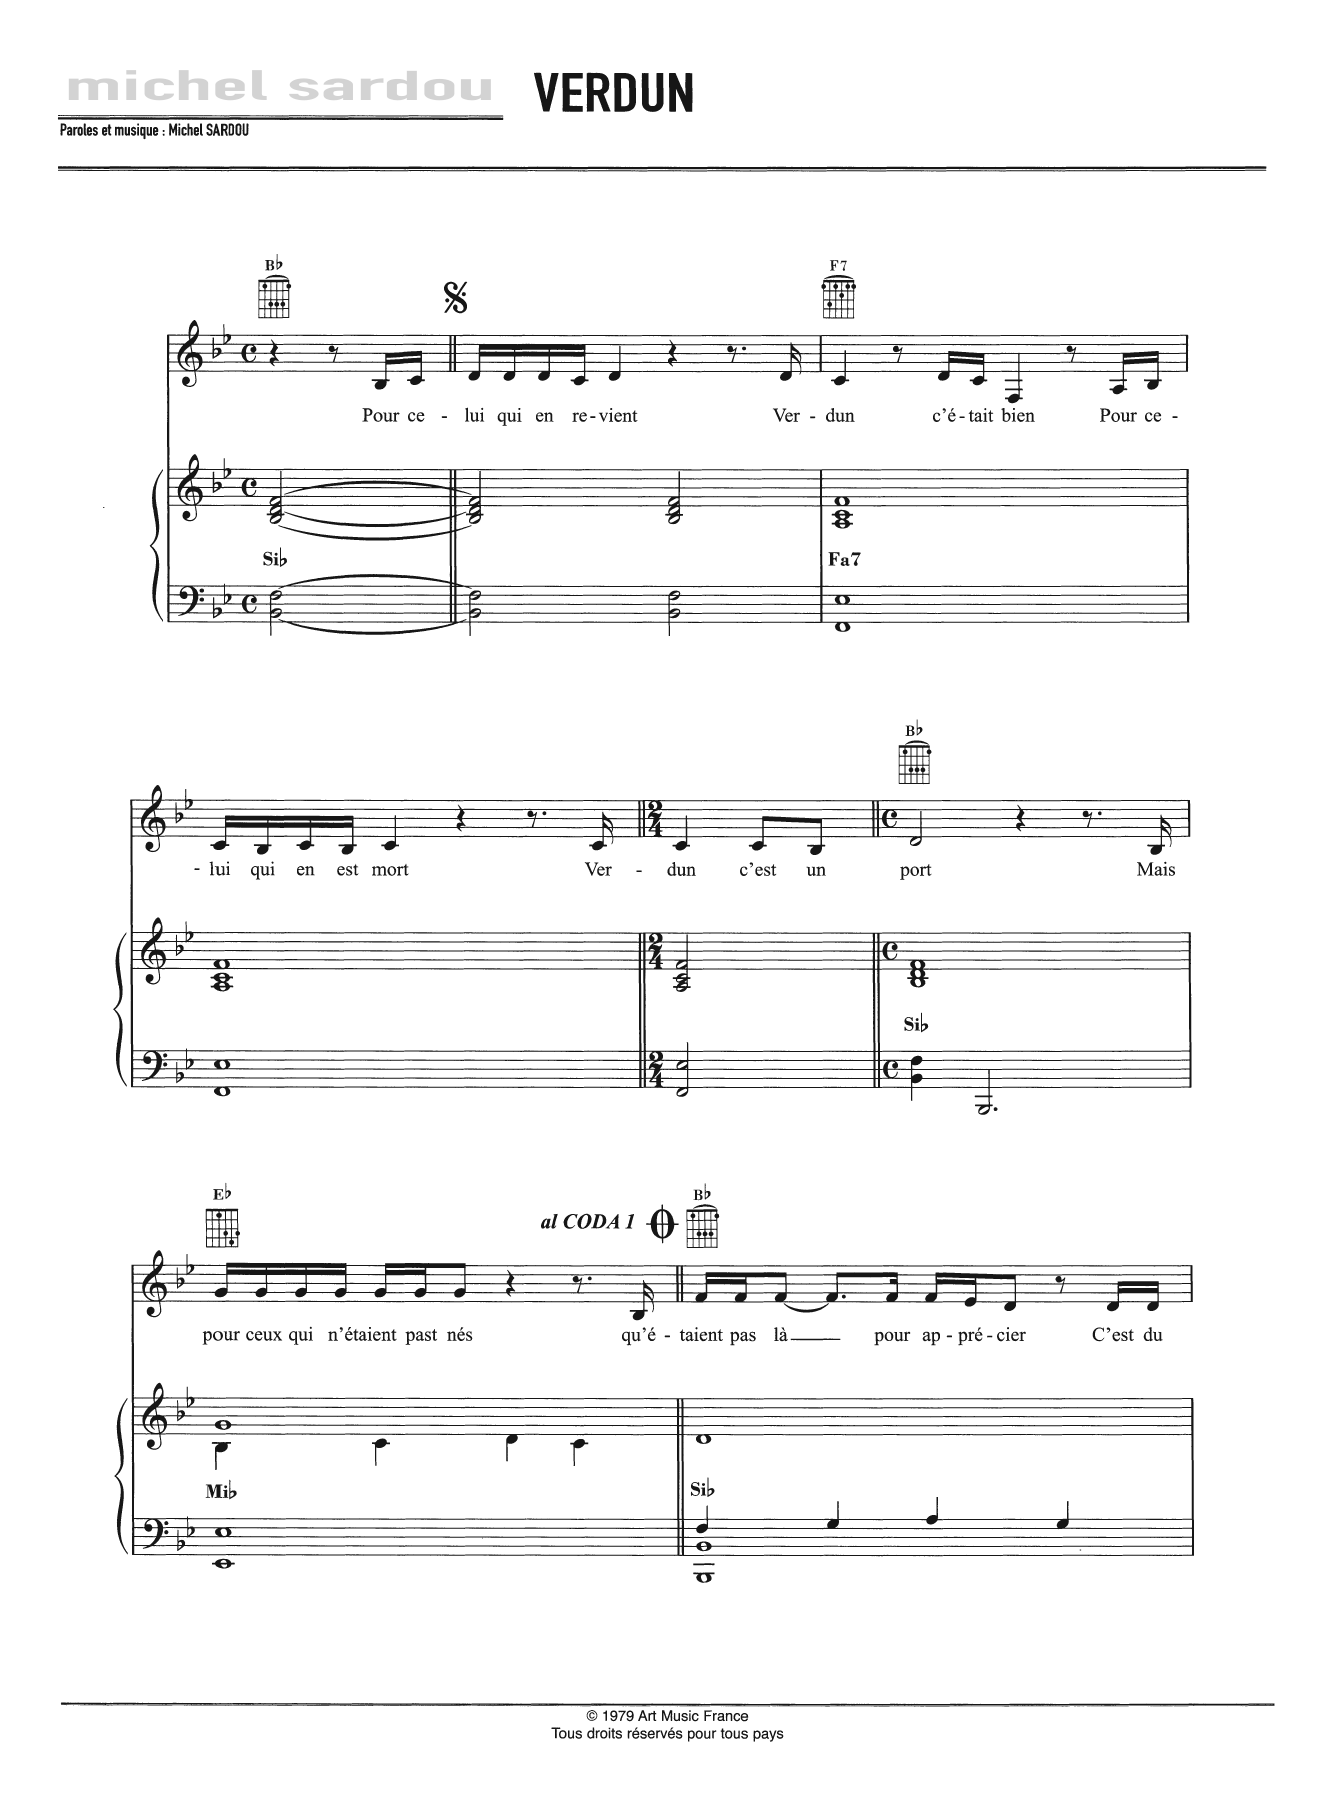 Michel Sardou Verdun Sheet Music Notes & Chords for Piano, Vocal & Guitar - Download or Print PDF